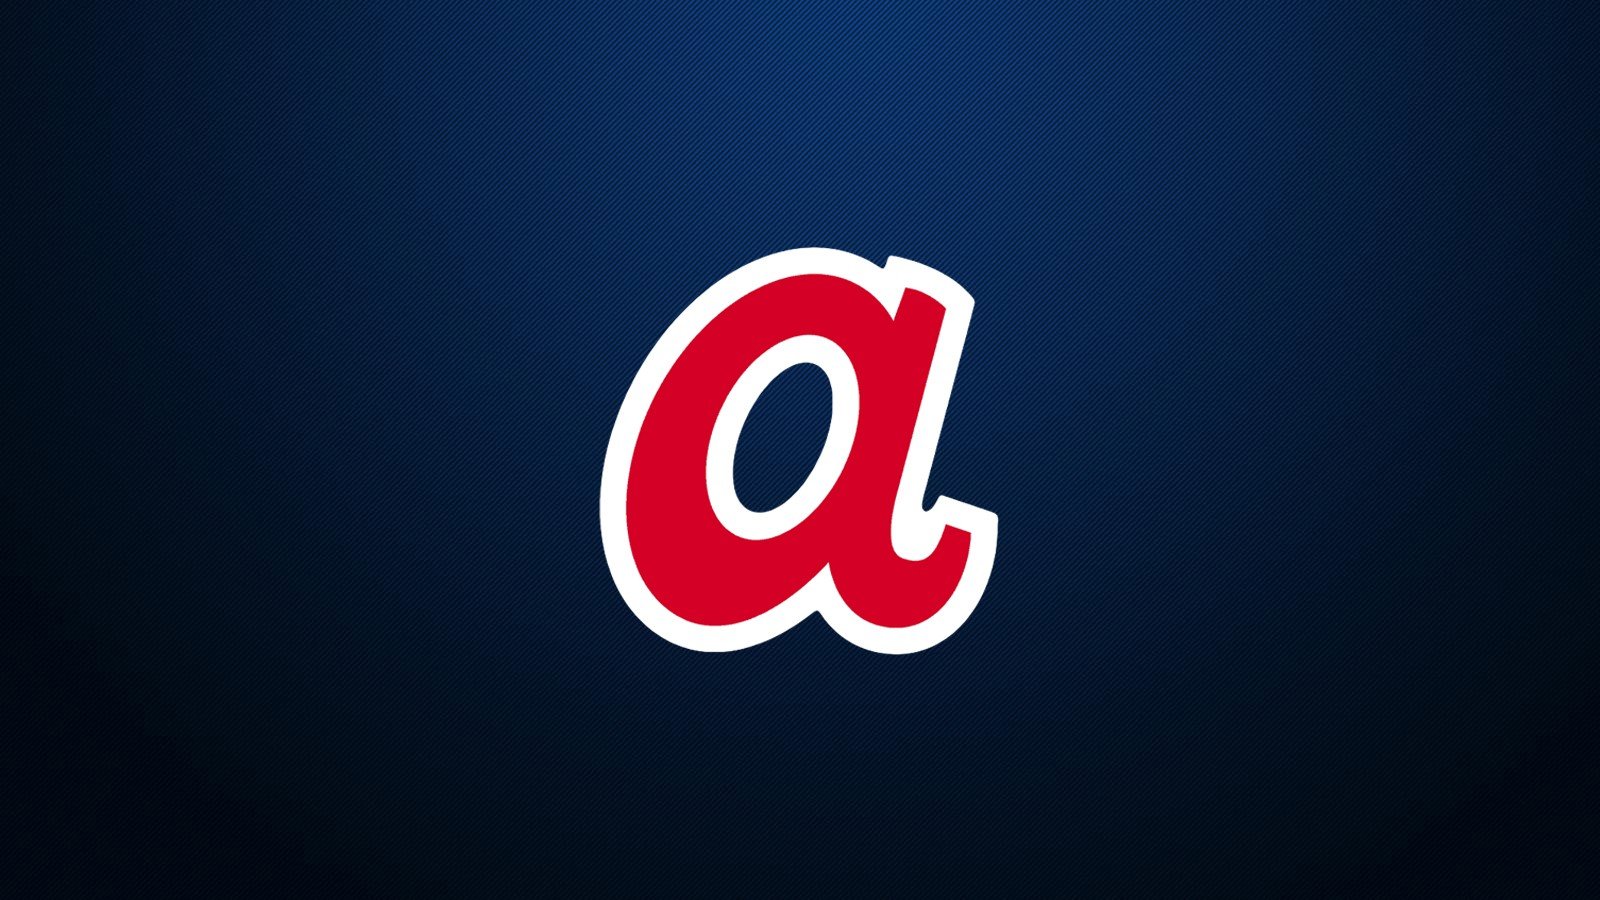 Blue Retro Atlanta Braves Logos Wallpaper Background